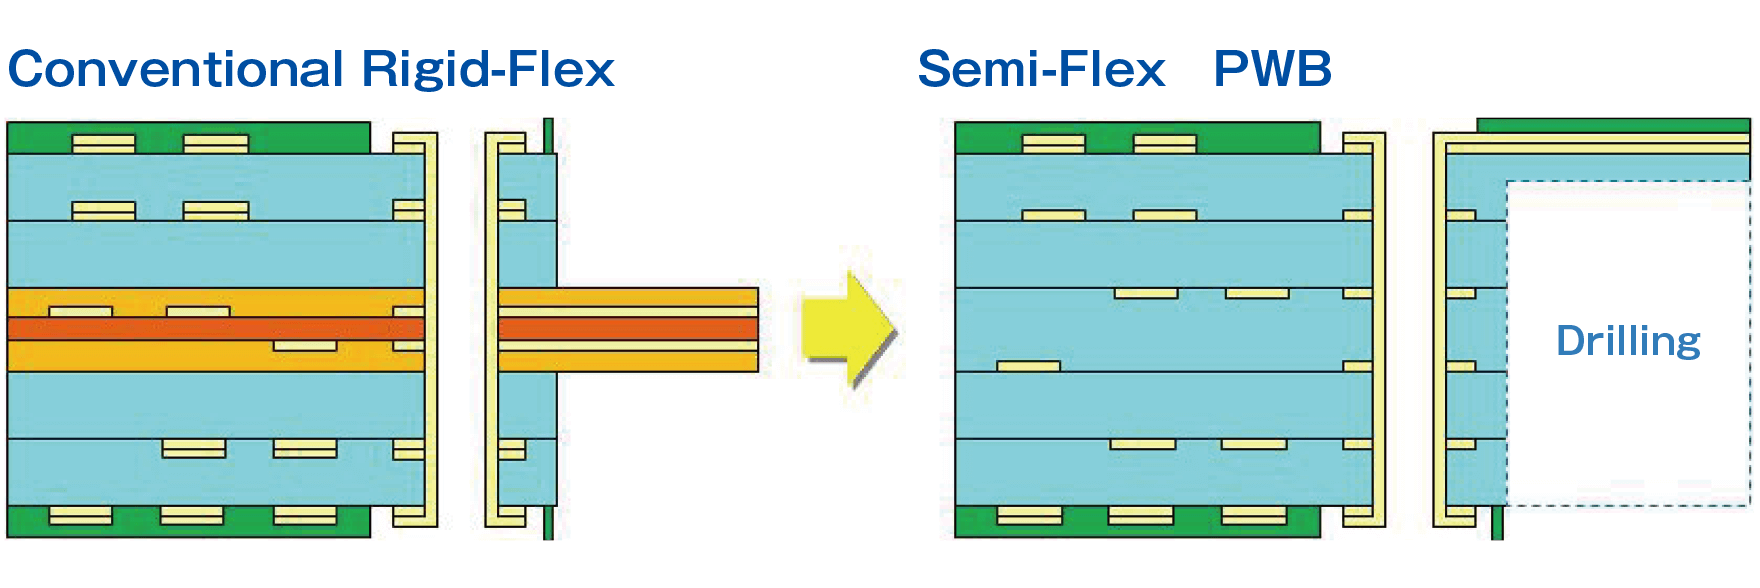 Diagram of a conventional rigid-flex PWB processed into a semi-flex PWB